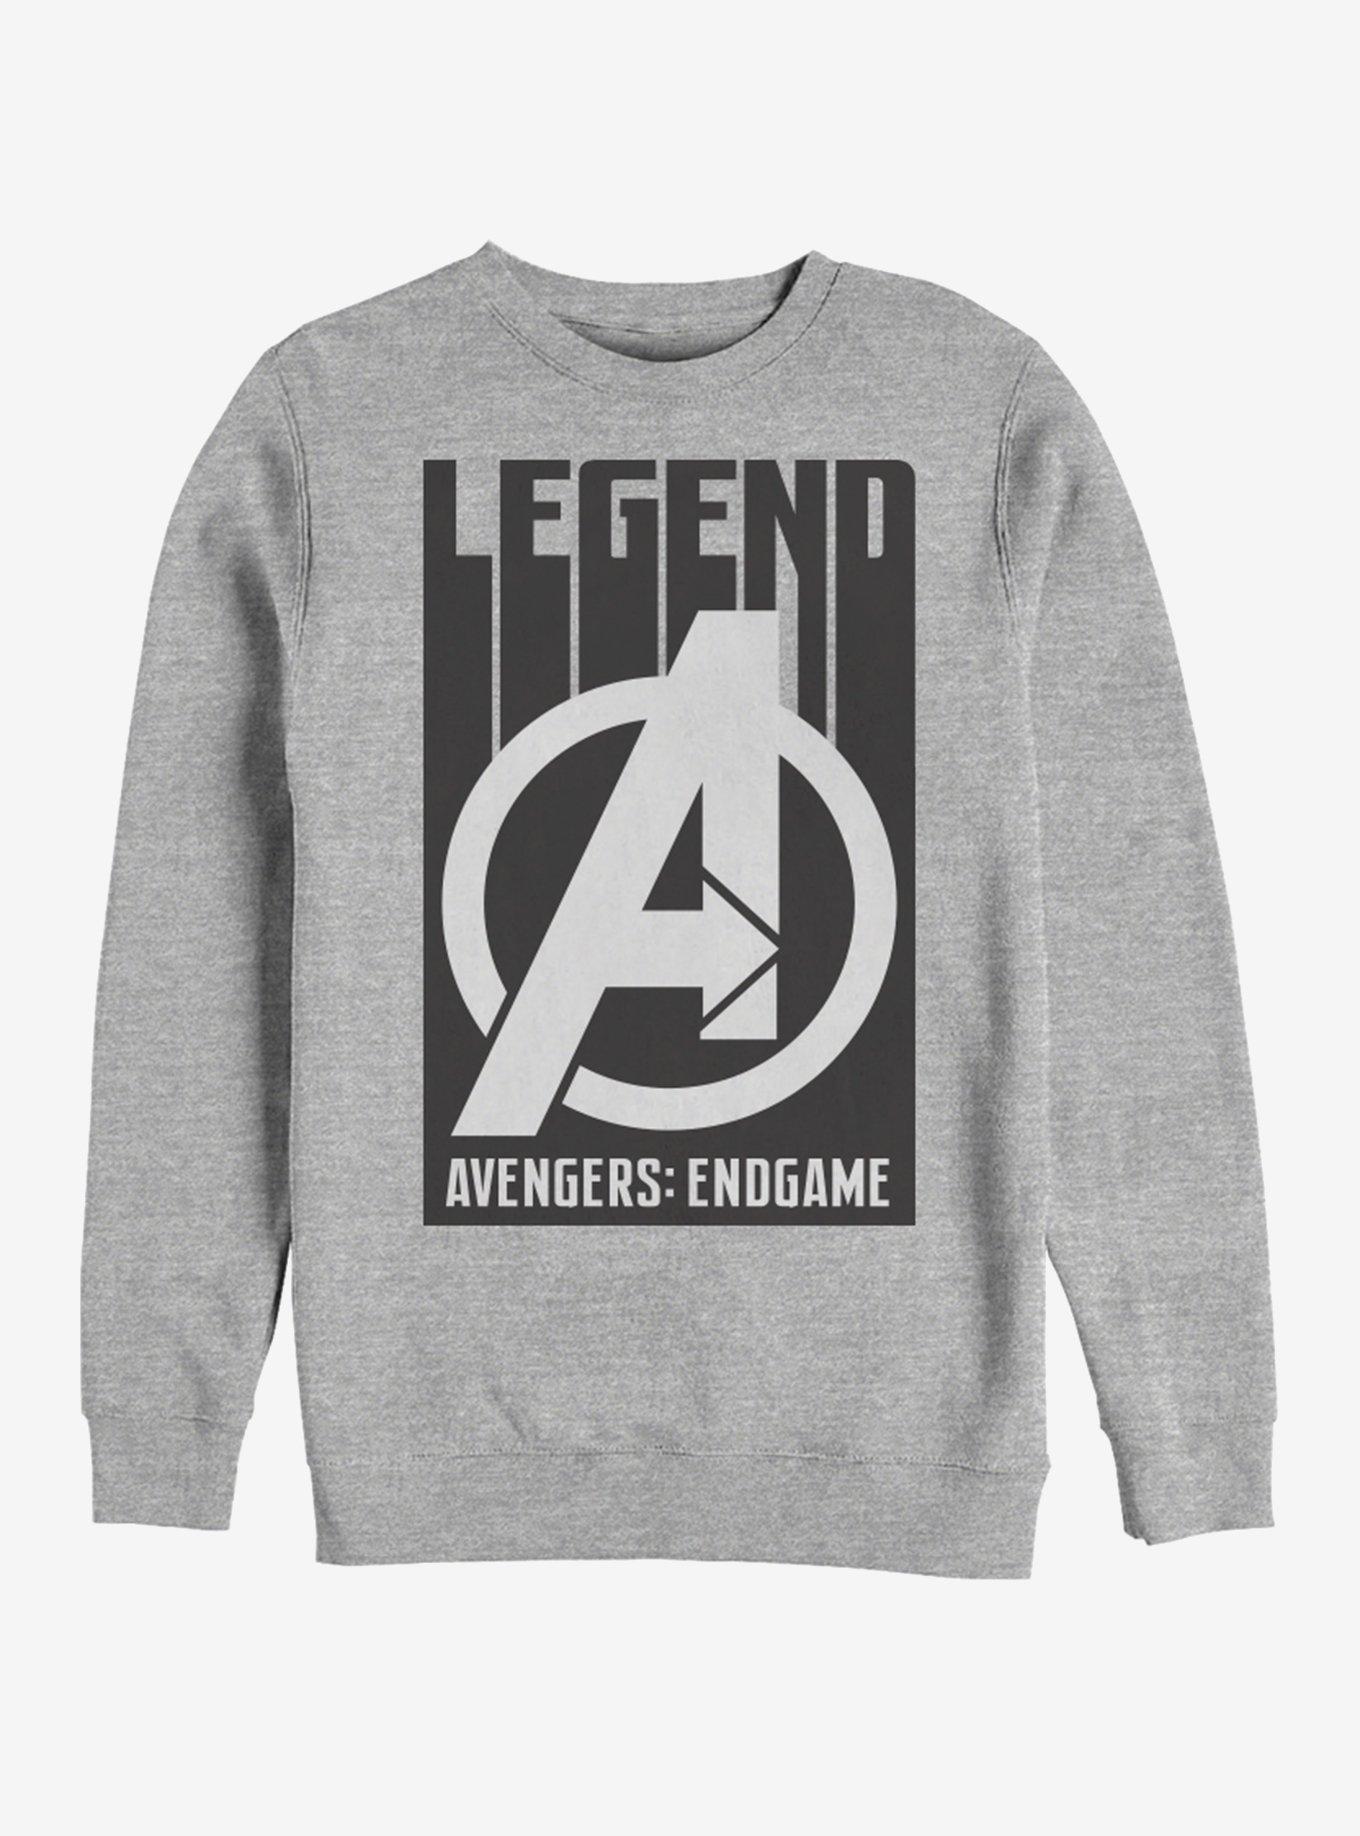 Marvel Avengers: Endgame Avengers Legend Heathered Sweatshirt